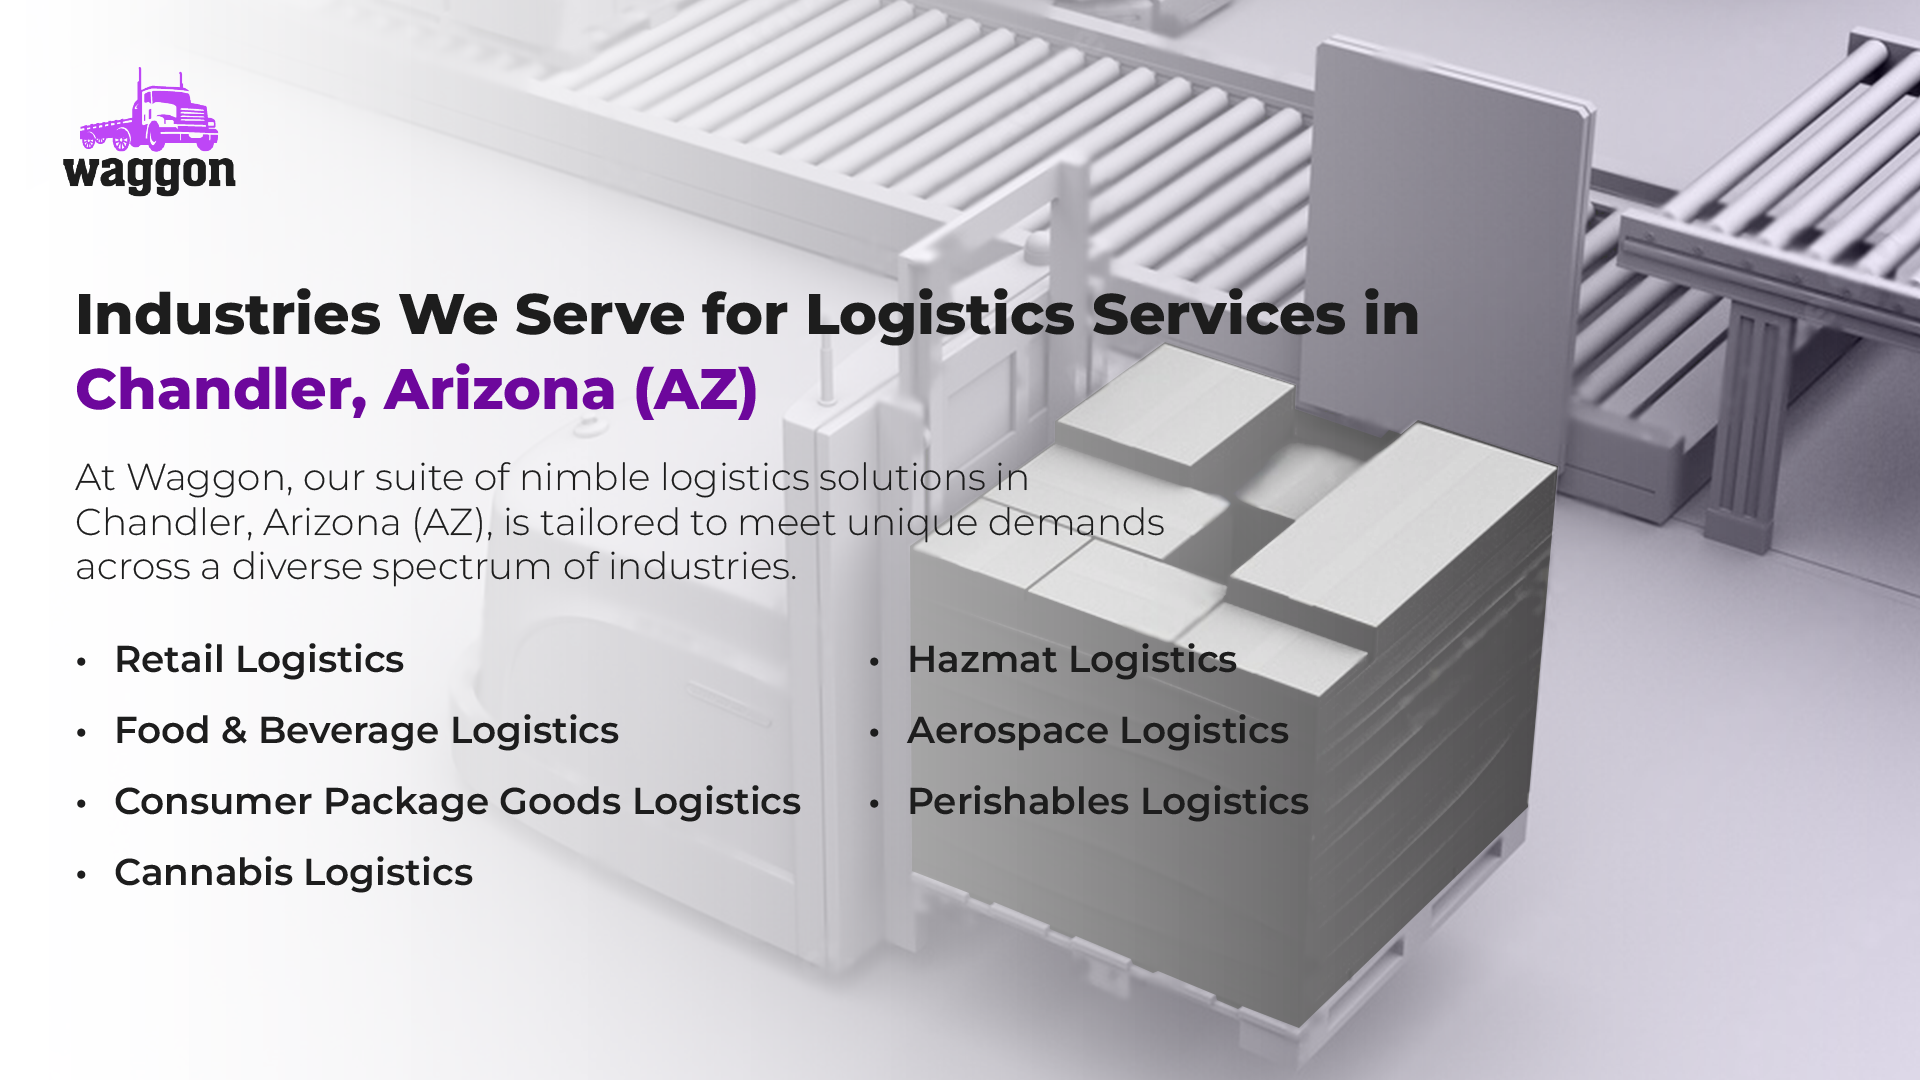 Industries We Serve for Logistics Services in Chandler, Arizona (AZ)